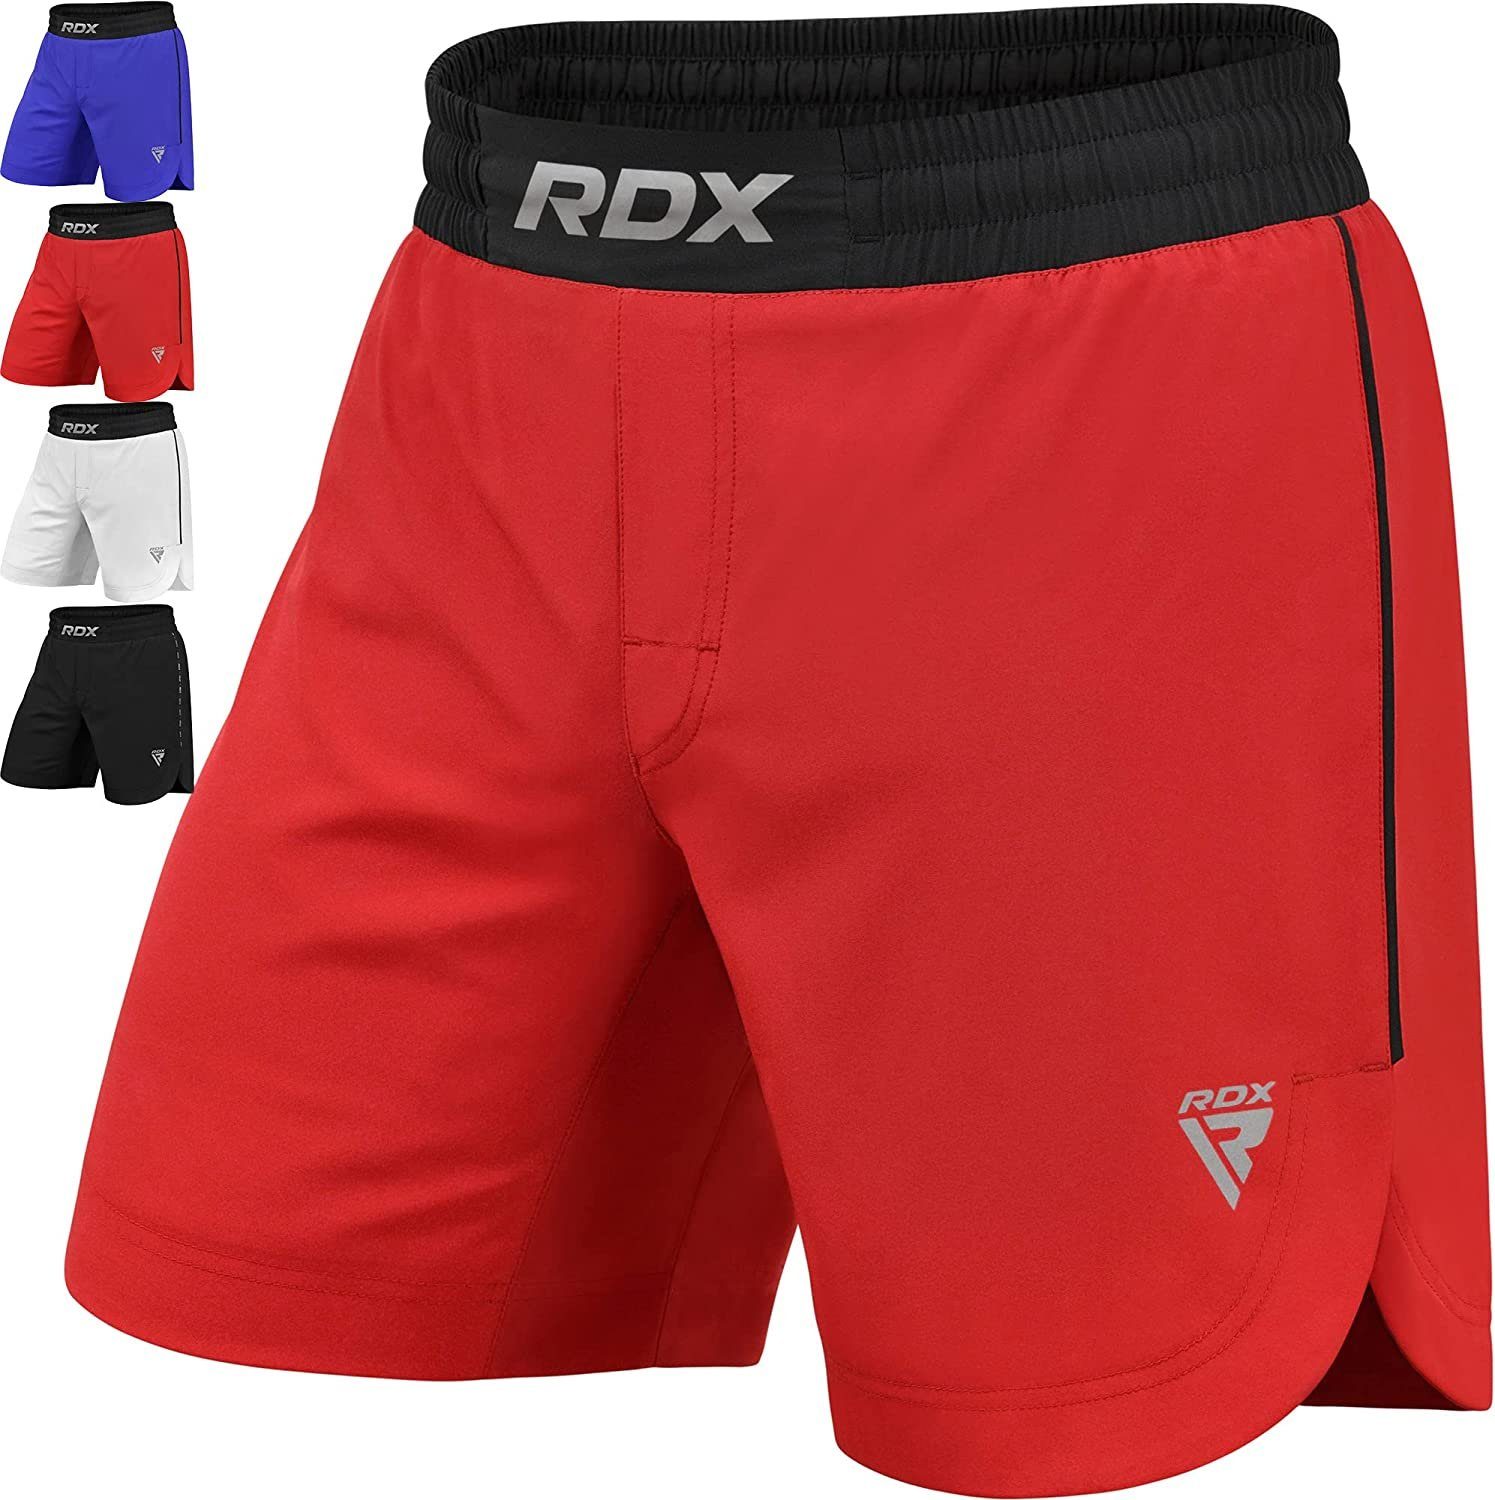 MMA Trainingsshorts RDX Herren, Sports Sporthose kurz, Herren RED Trainingshose Shorts RDX Kickboxen